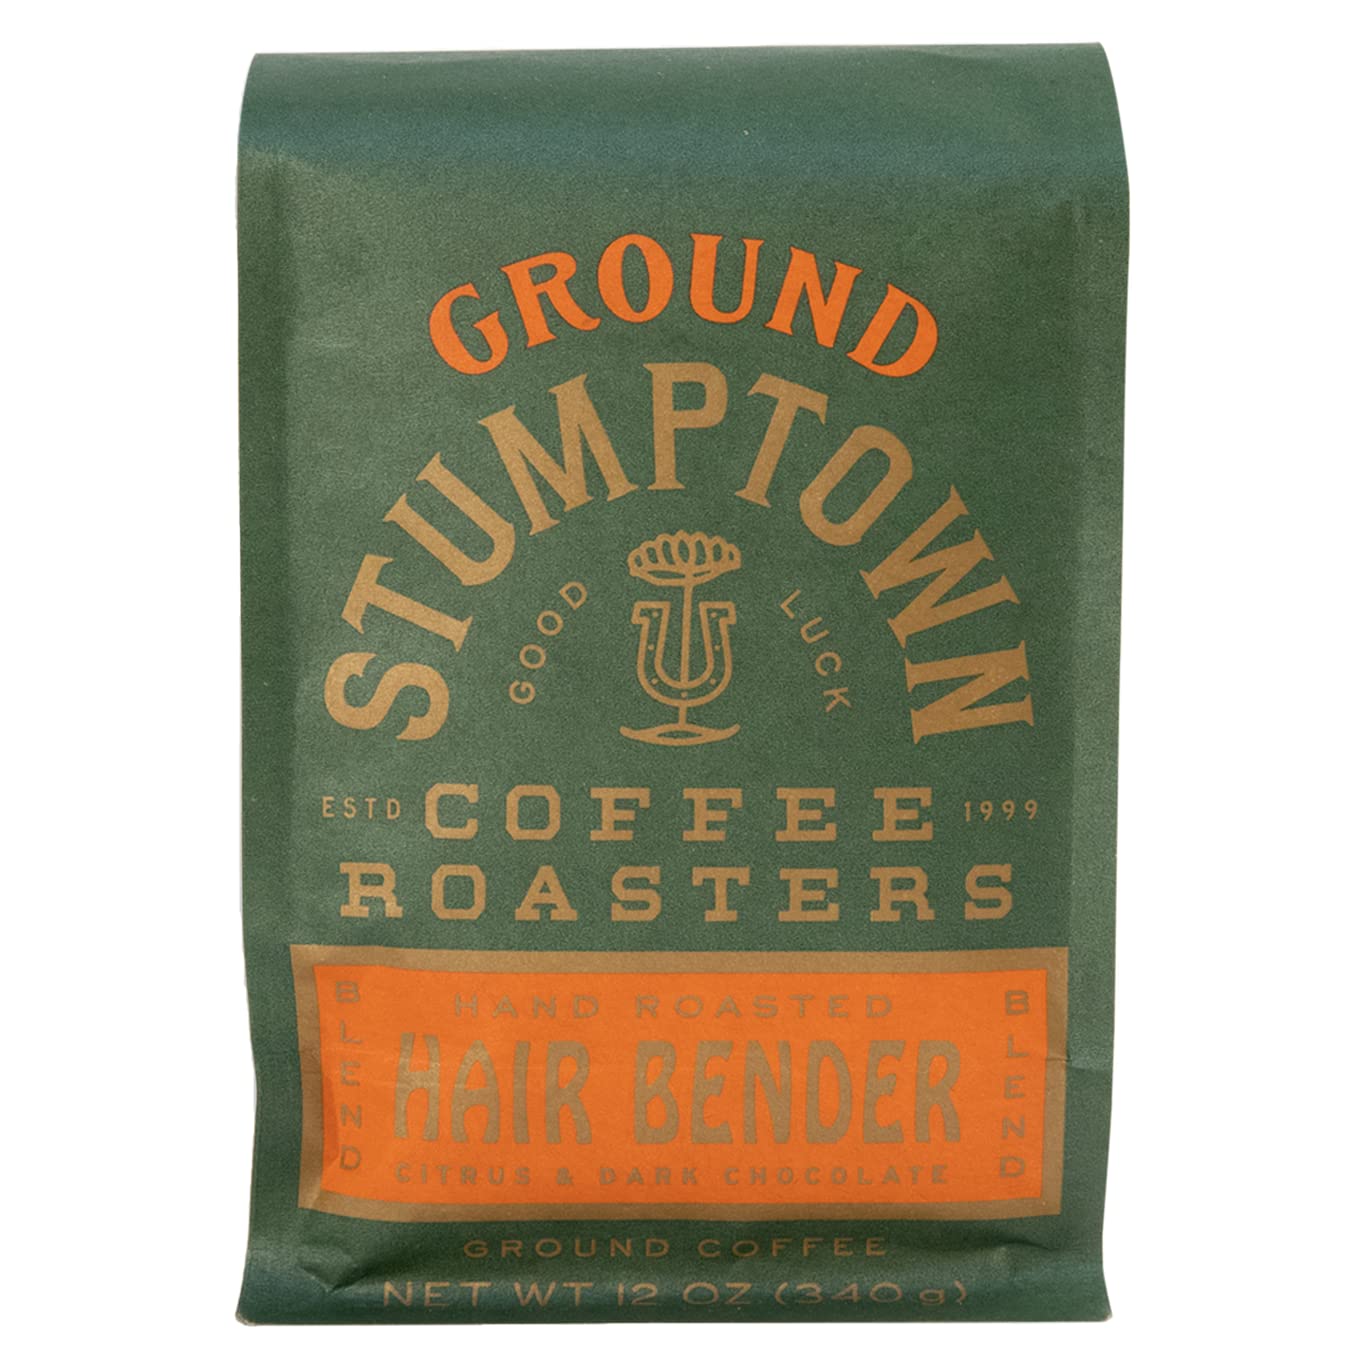 12-Oz Stumptown Coffee Roasters Ground Coffee (Hair Bender, Medium Roast) $6.32 w/ S&S + Free Shipping w/ Prime or on orders over $35